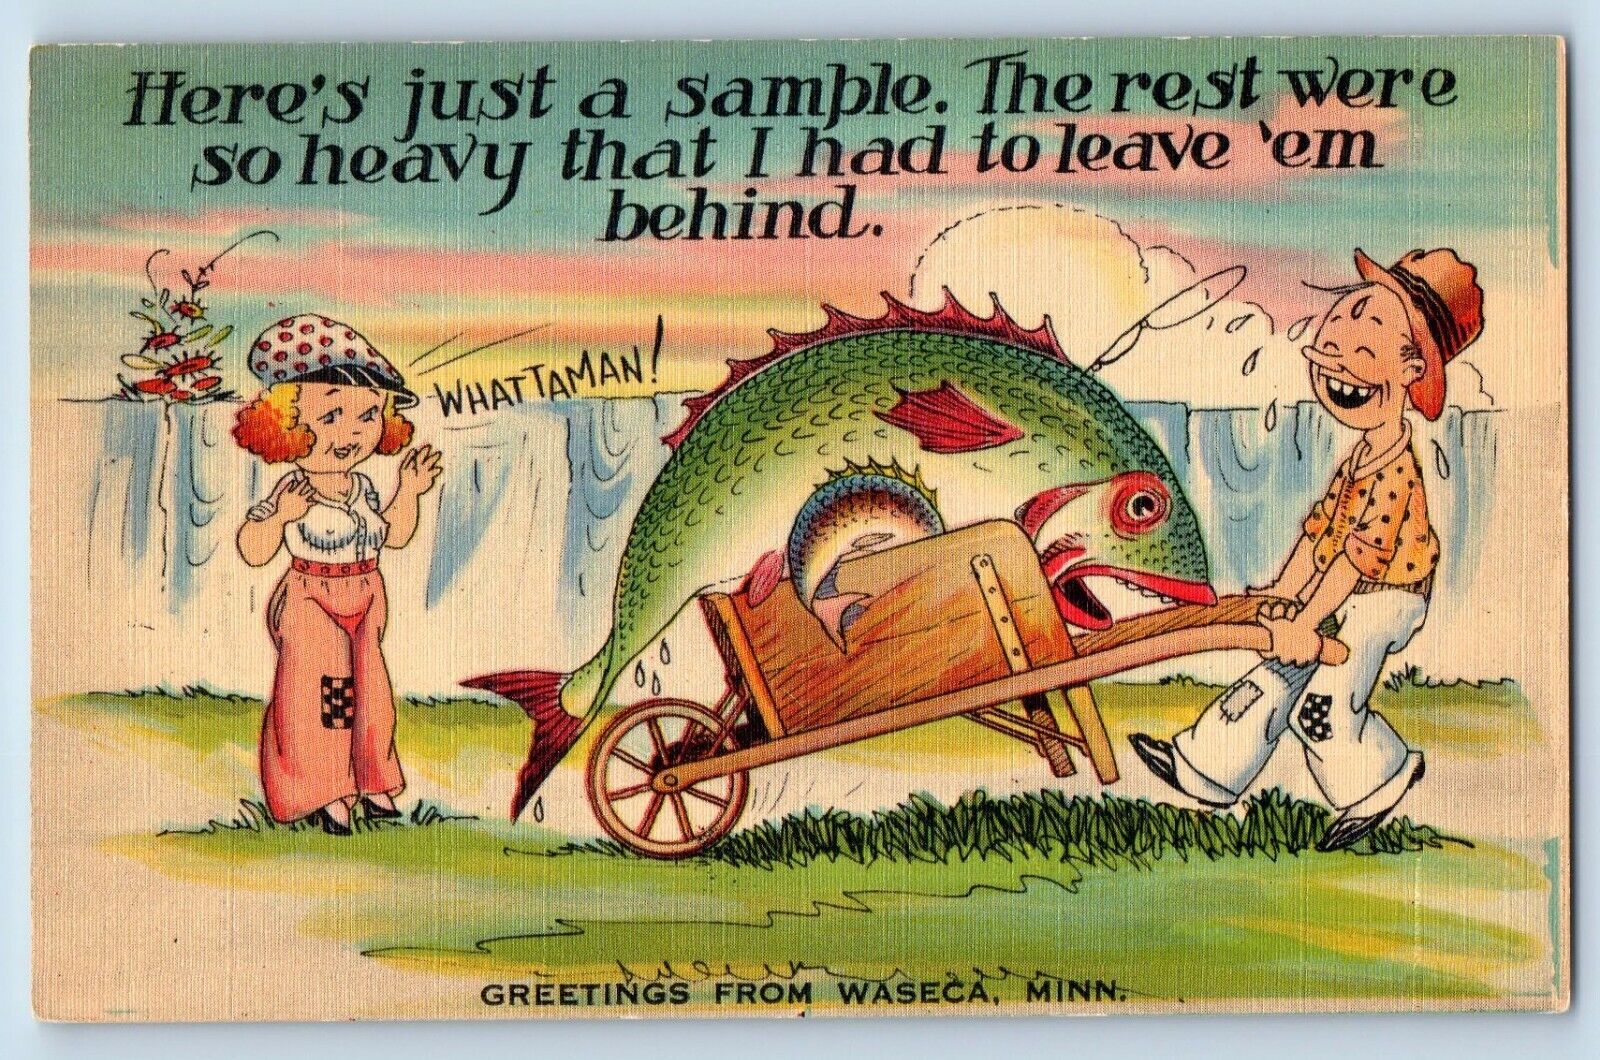 Waseca Minnesota Postcard Greetings Exaggerated Comic Humor 1940 Vintage Antique